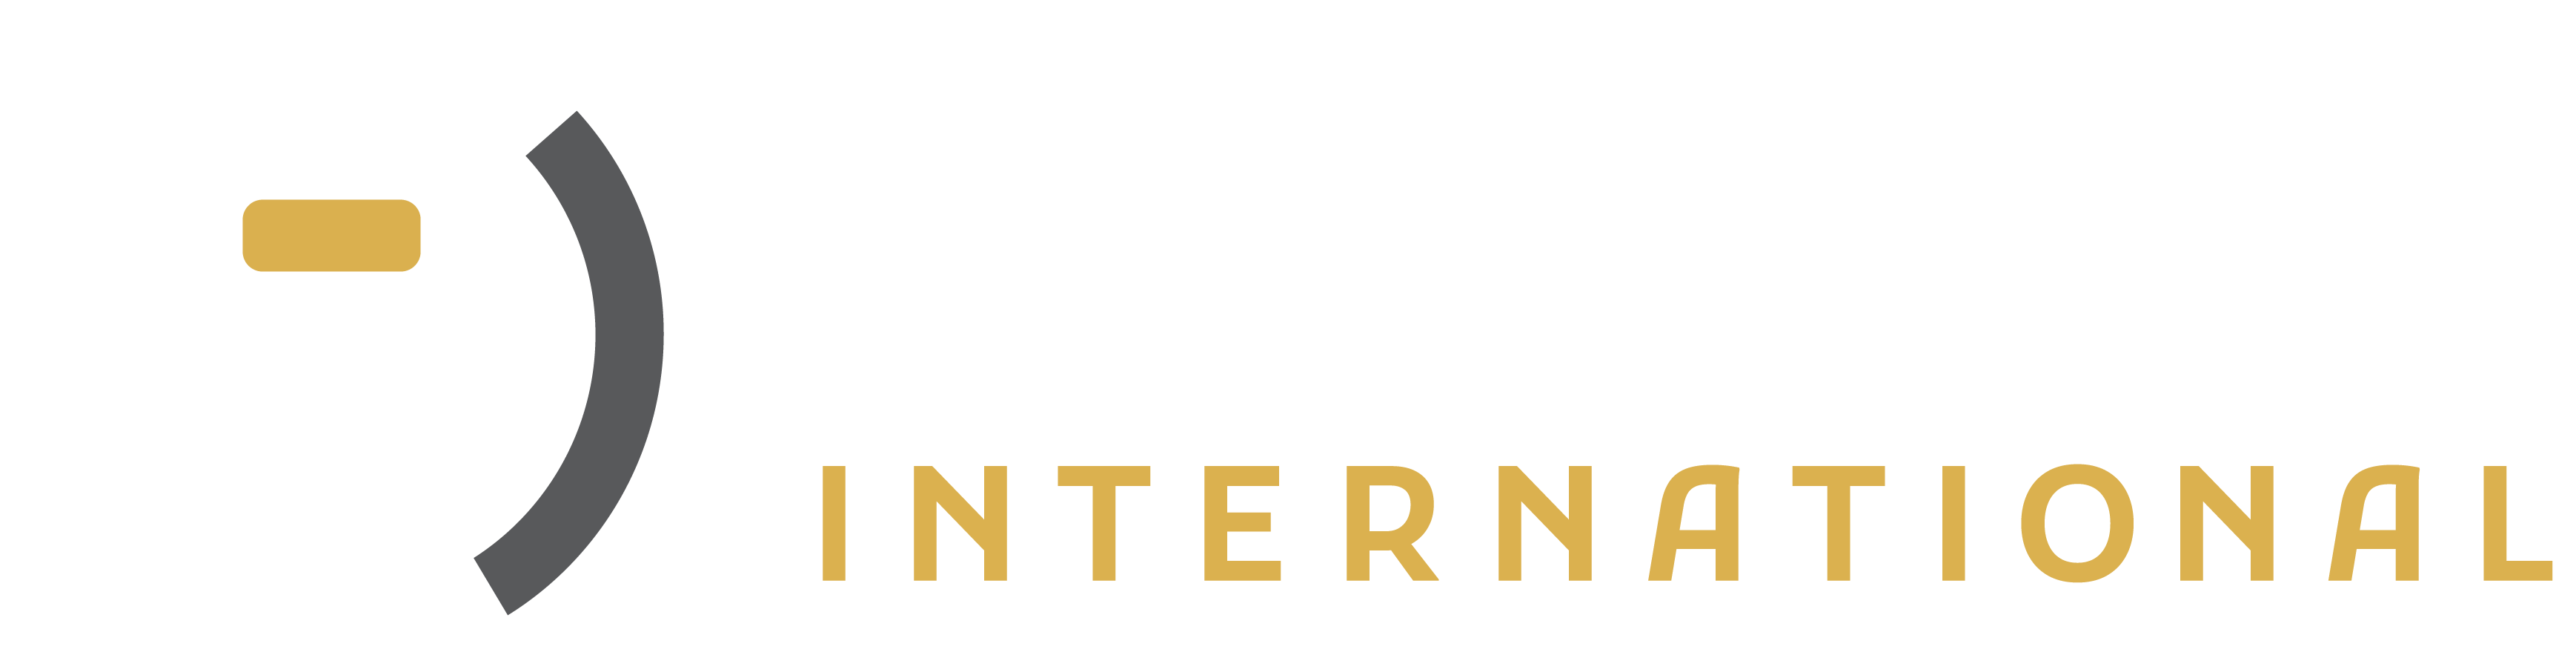 Company logo - home